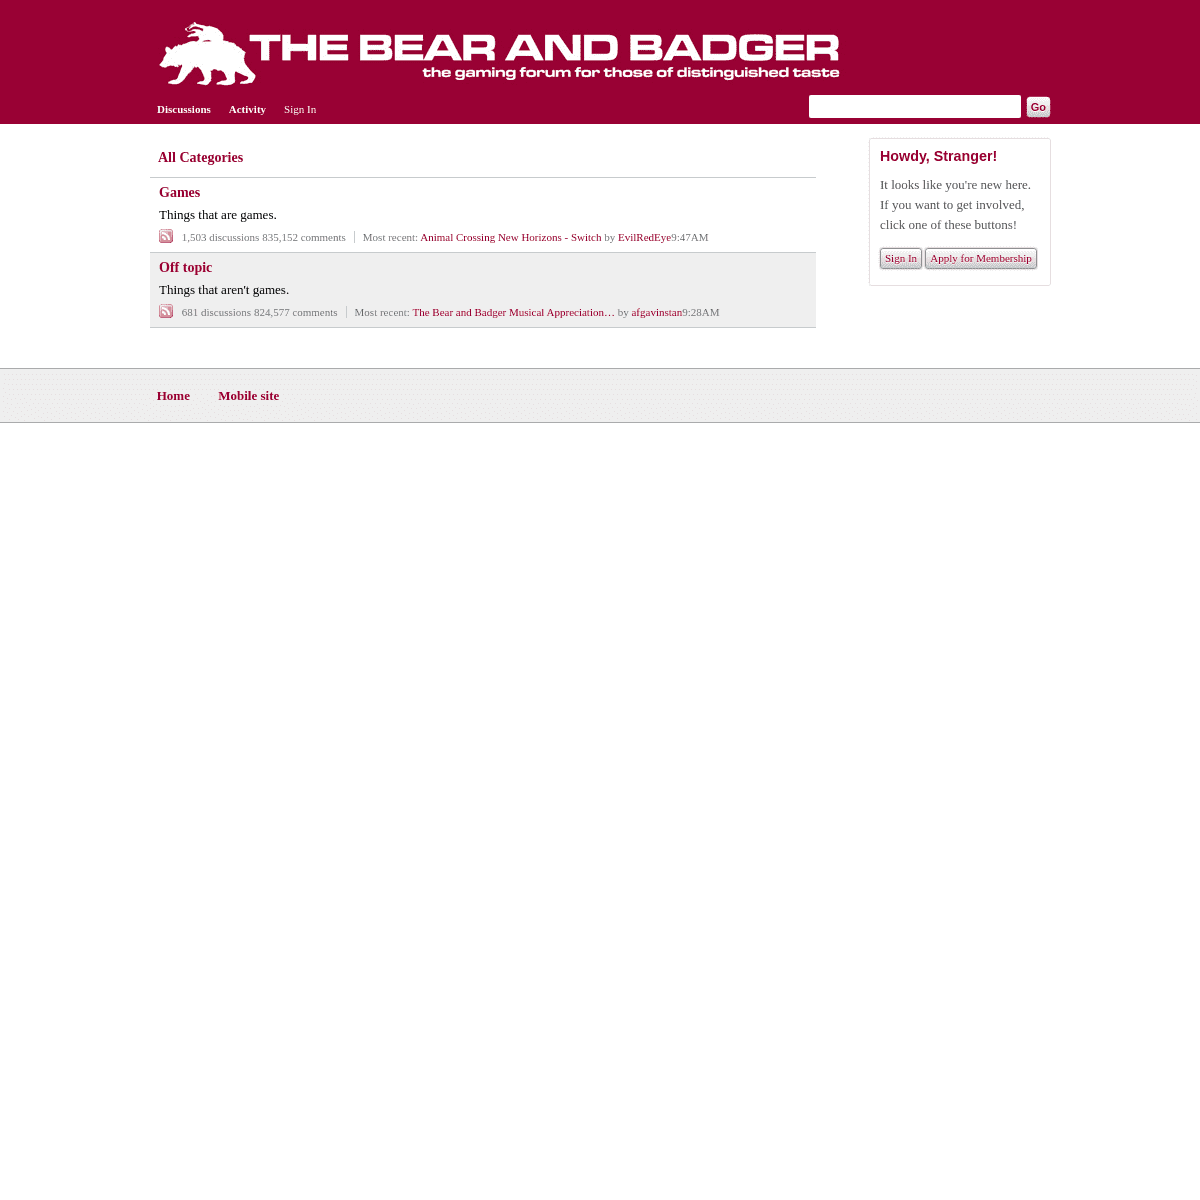 A complete backup of thebearandbadger.co.uk